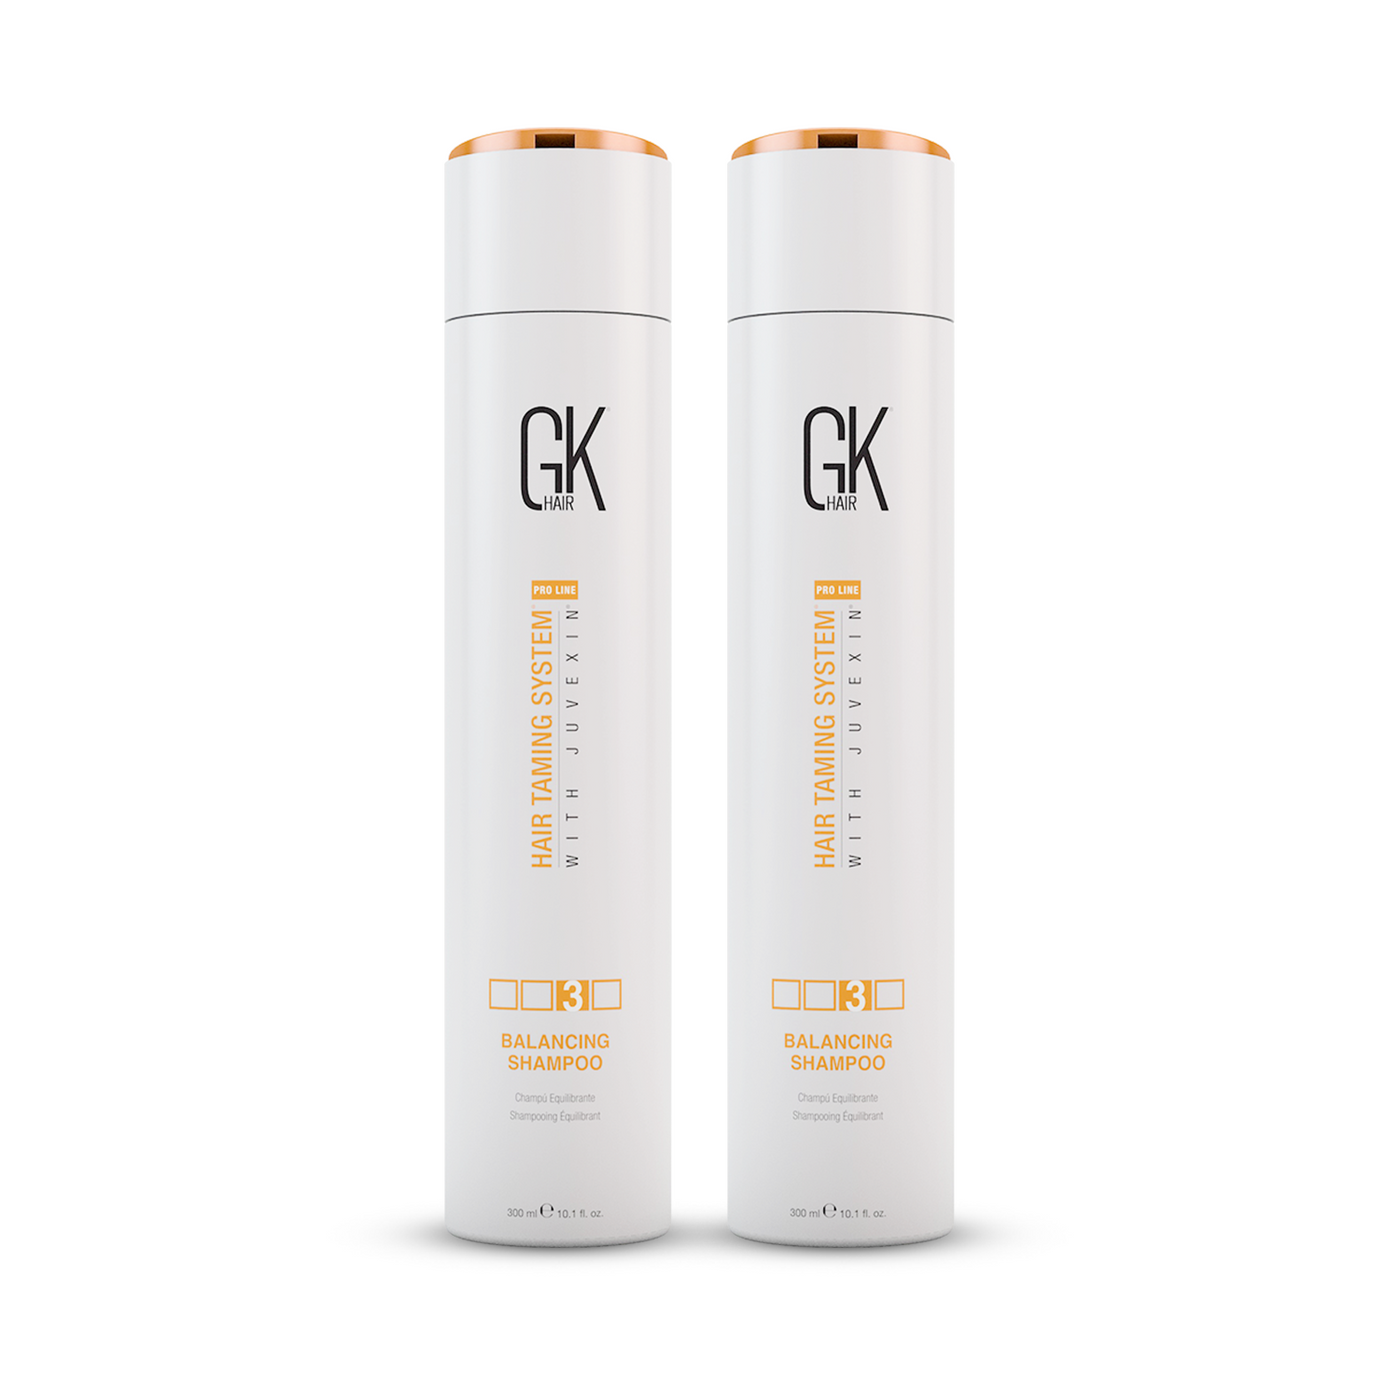 GK Hair Balancing Shampoo 300 Ml Pack of 2